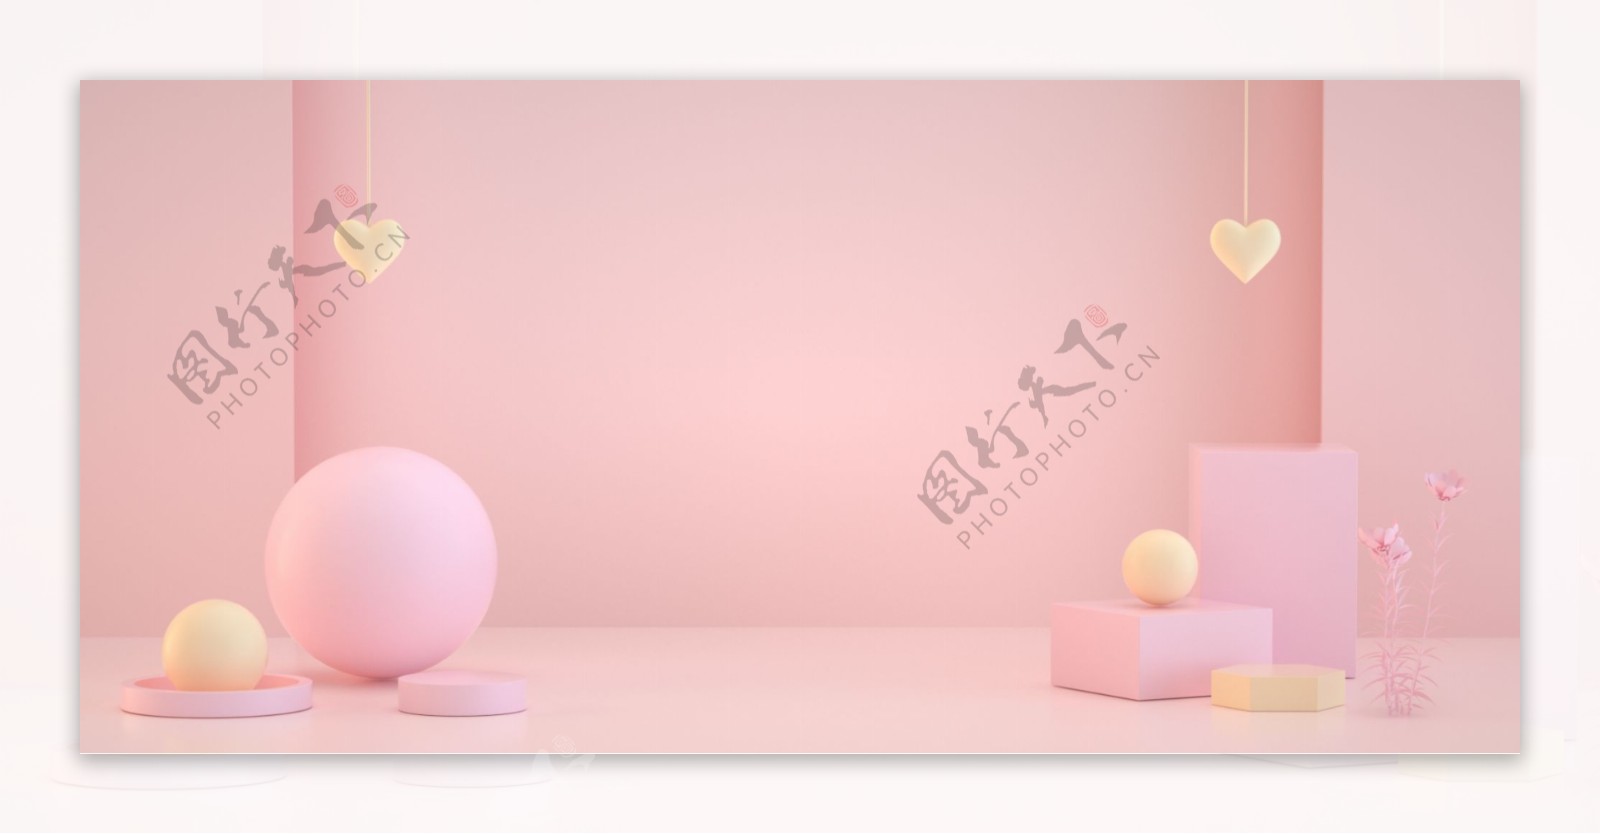 C4D简约展台电商粉色化妆品海报背景